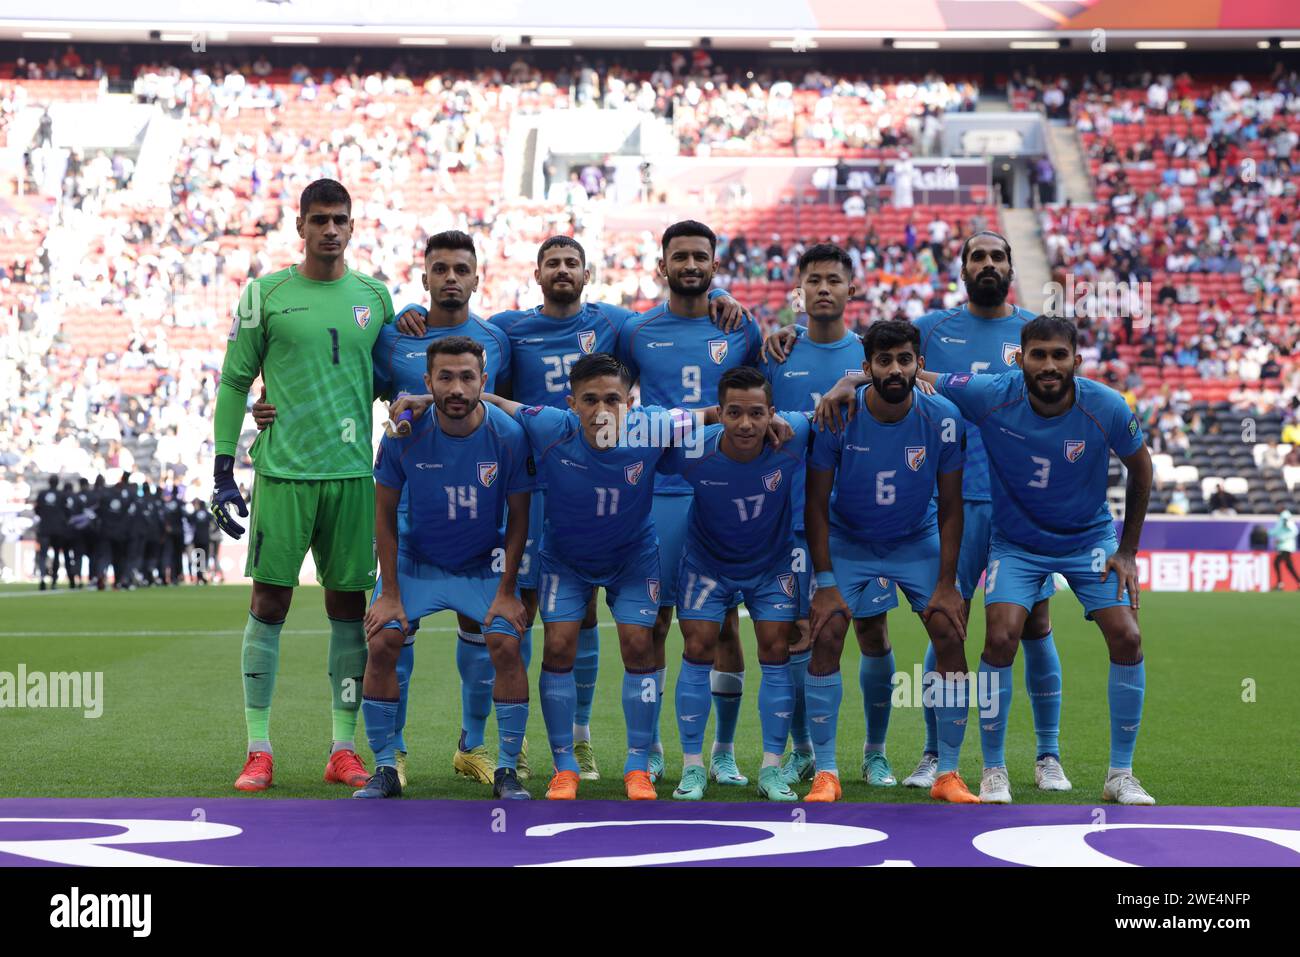 AL KHOR, QATAR - JANUARY 23: Players of India pose for a team photograph from left: Gurpreet Singh Sandhu, Rahul Bheke, Deepak Tangri, Manvir Singh, L Stock Photo